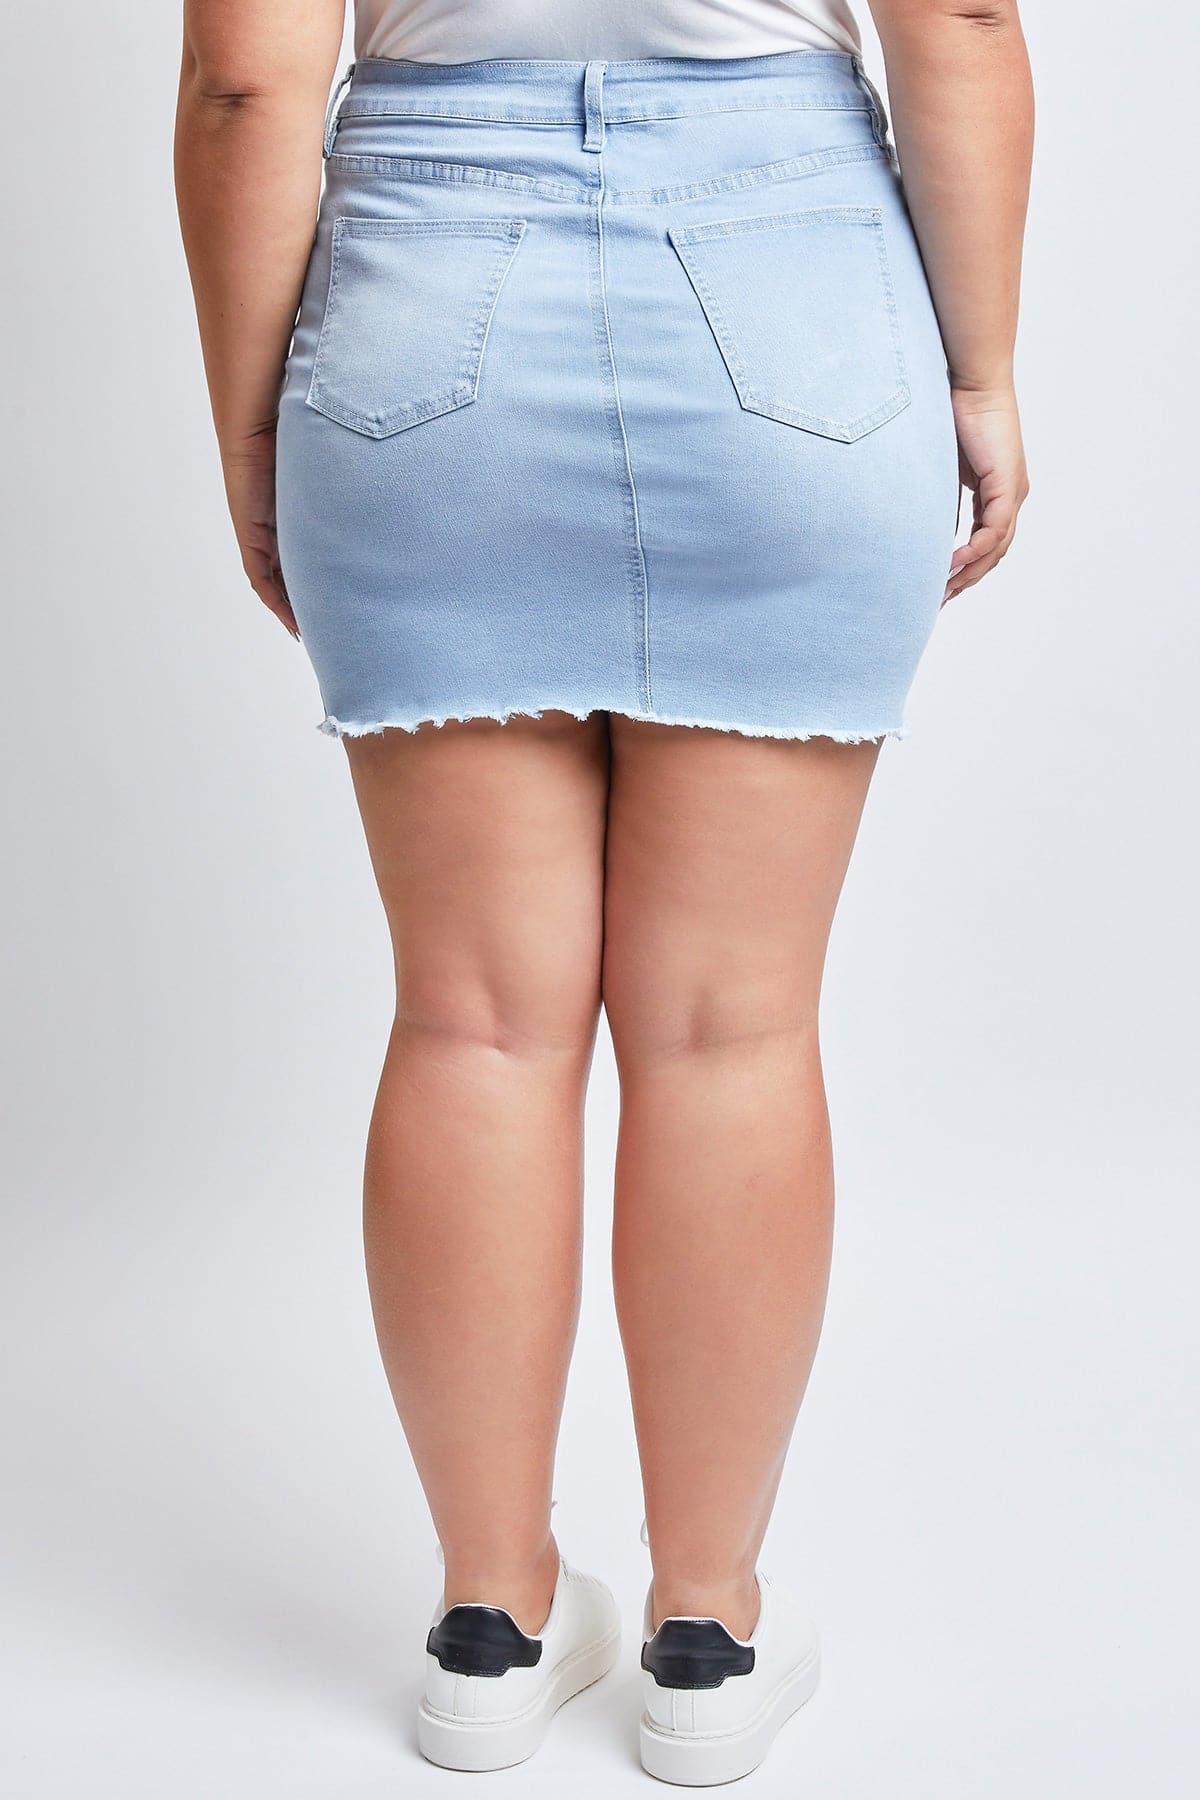 Women's Plus Size Exposed Button Fray Hem Skirt-Sale